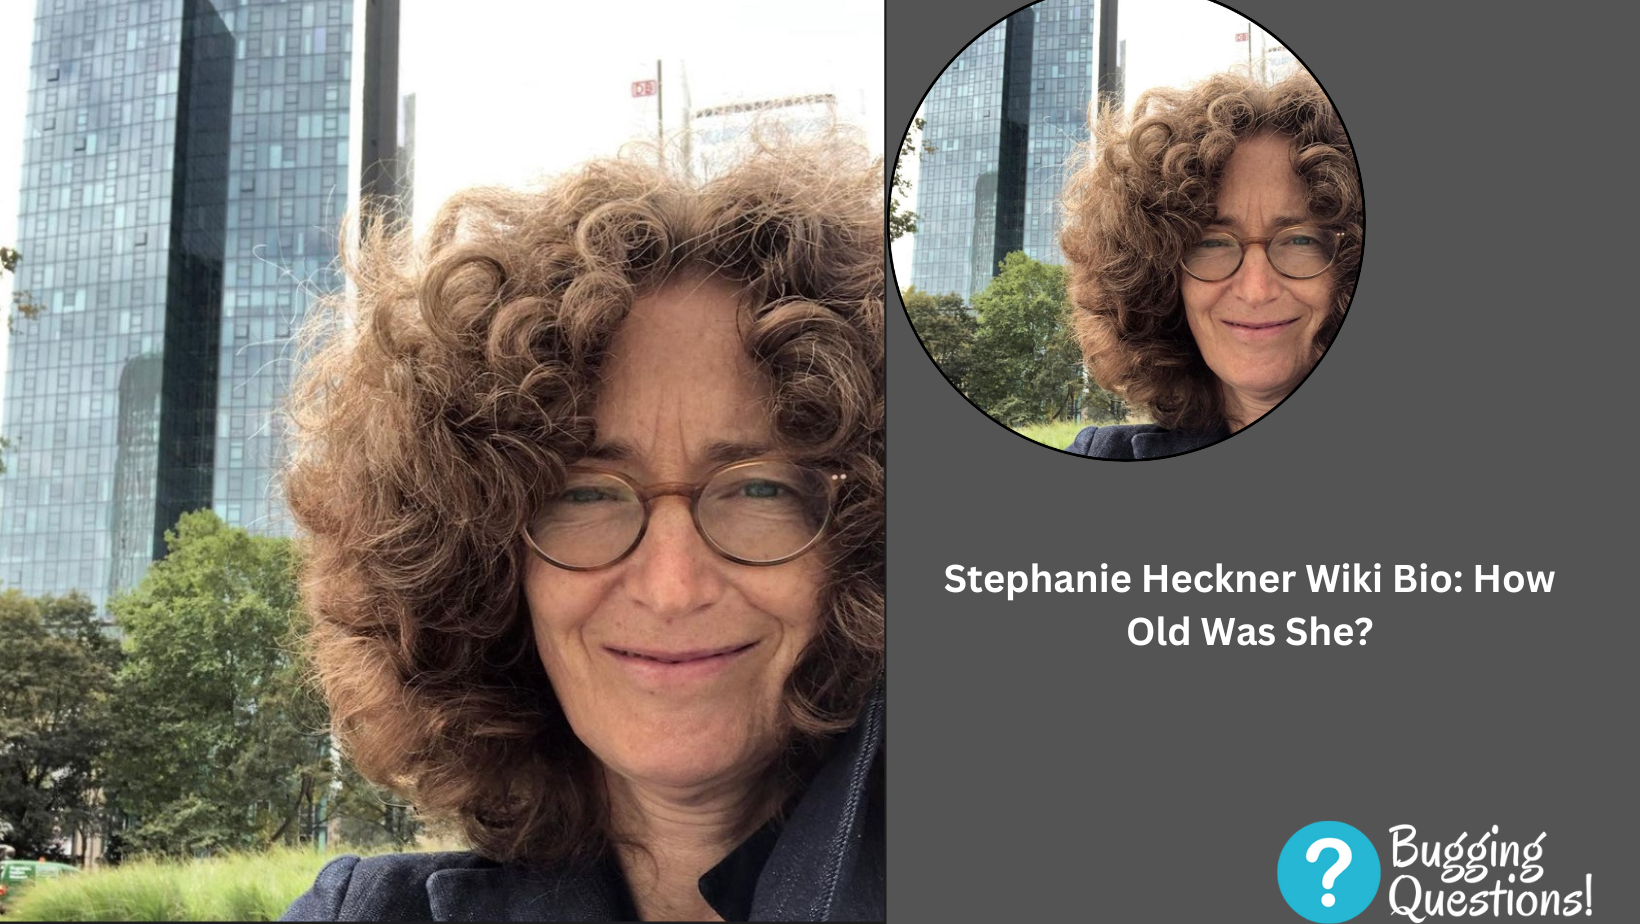 Stephanie Heckner Wiki Bio: How Old Was She?